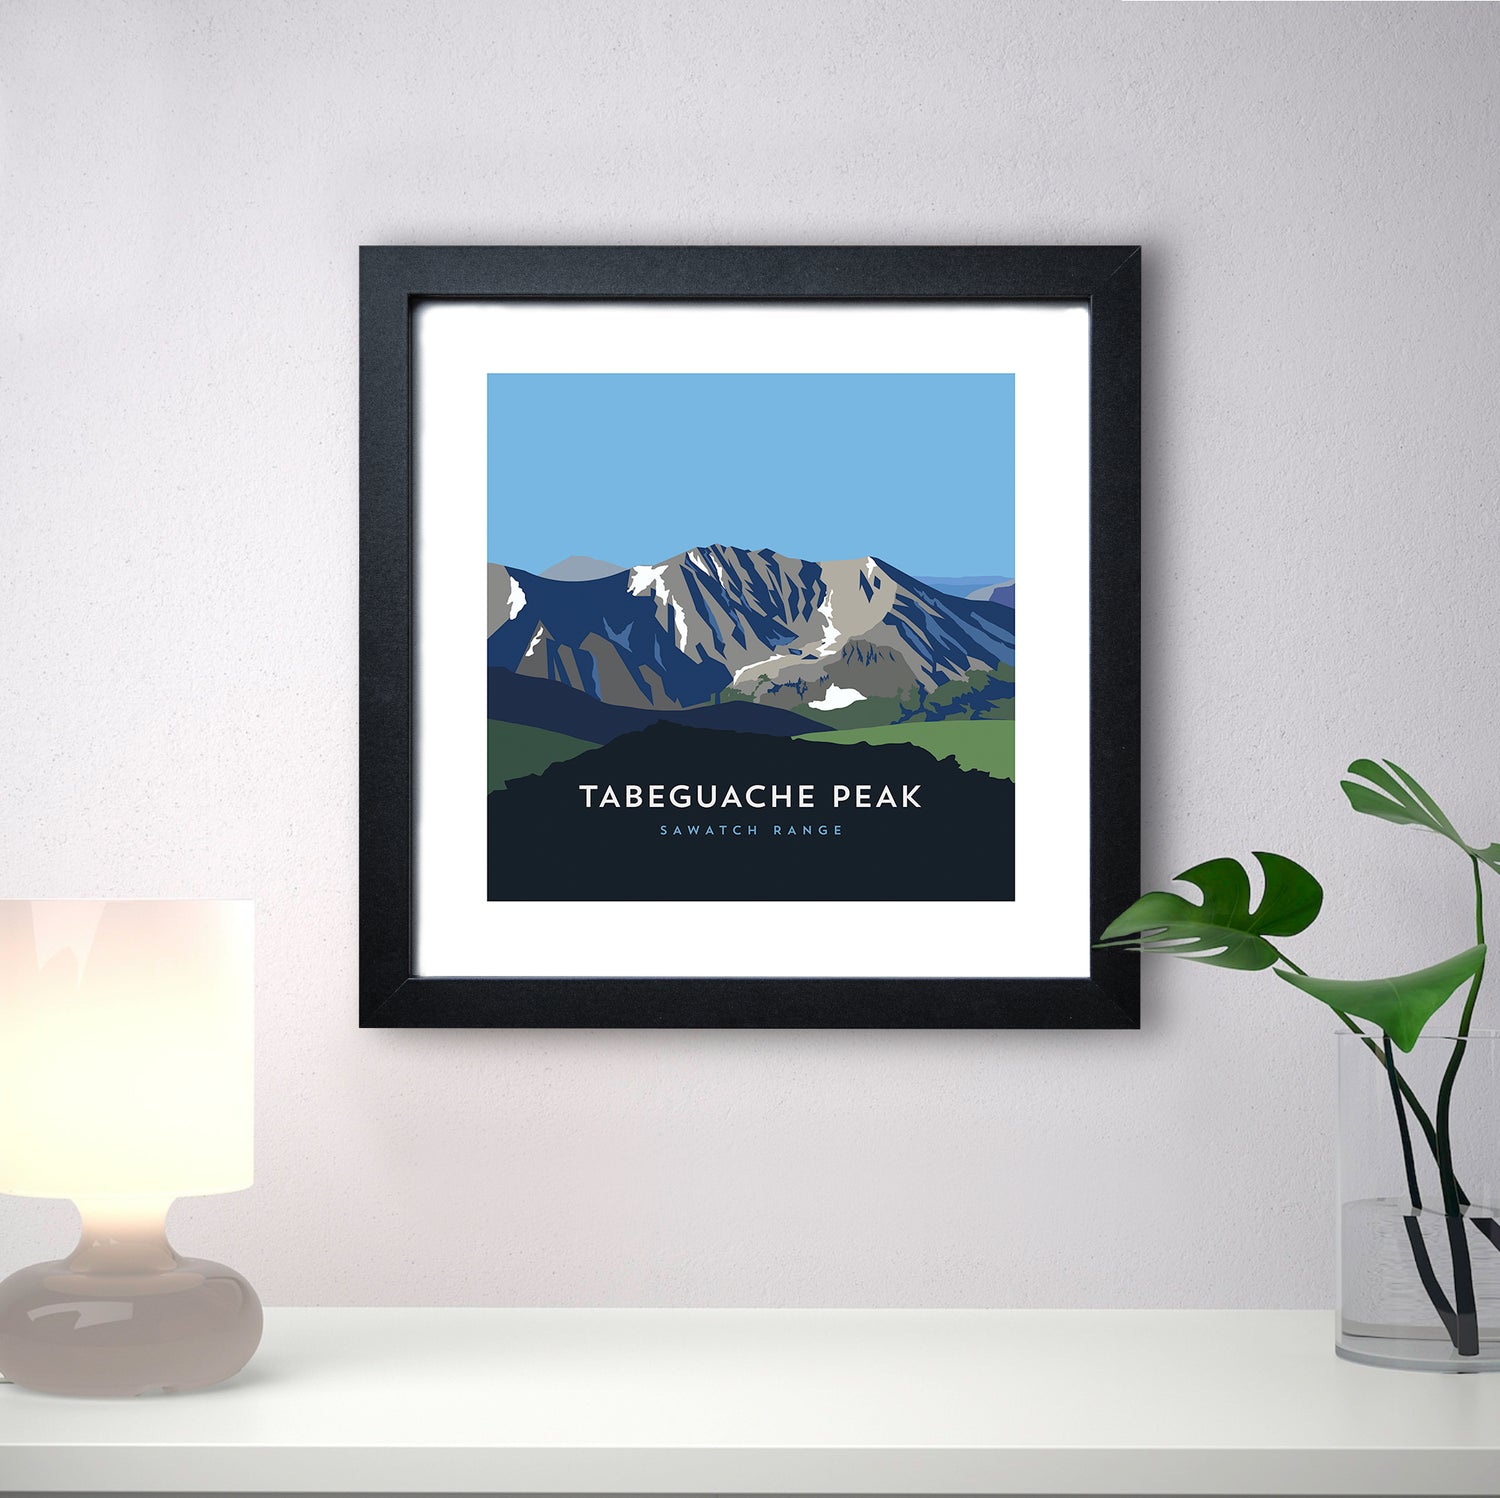 Tabeguache Peak Colorado 14er Print